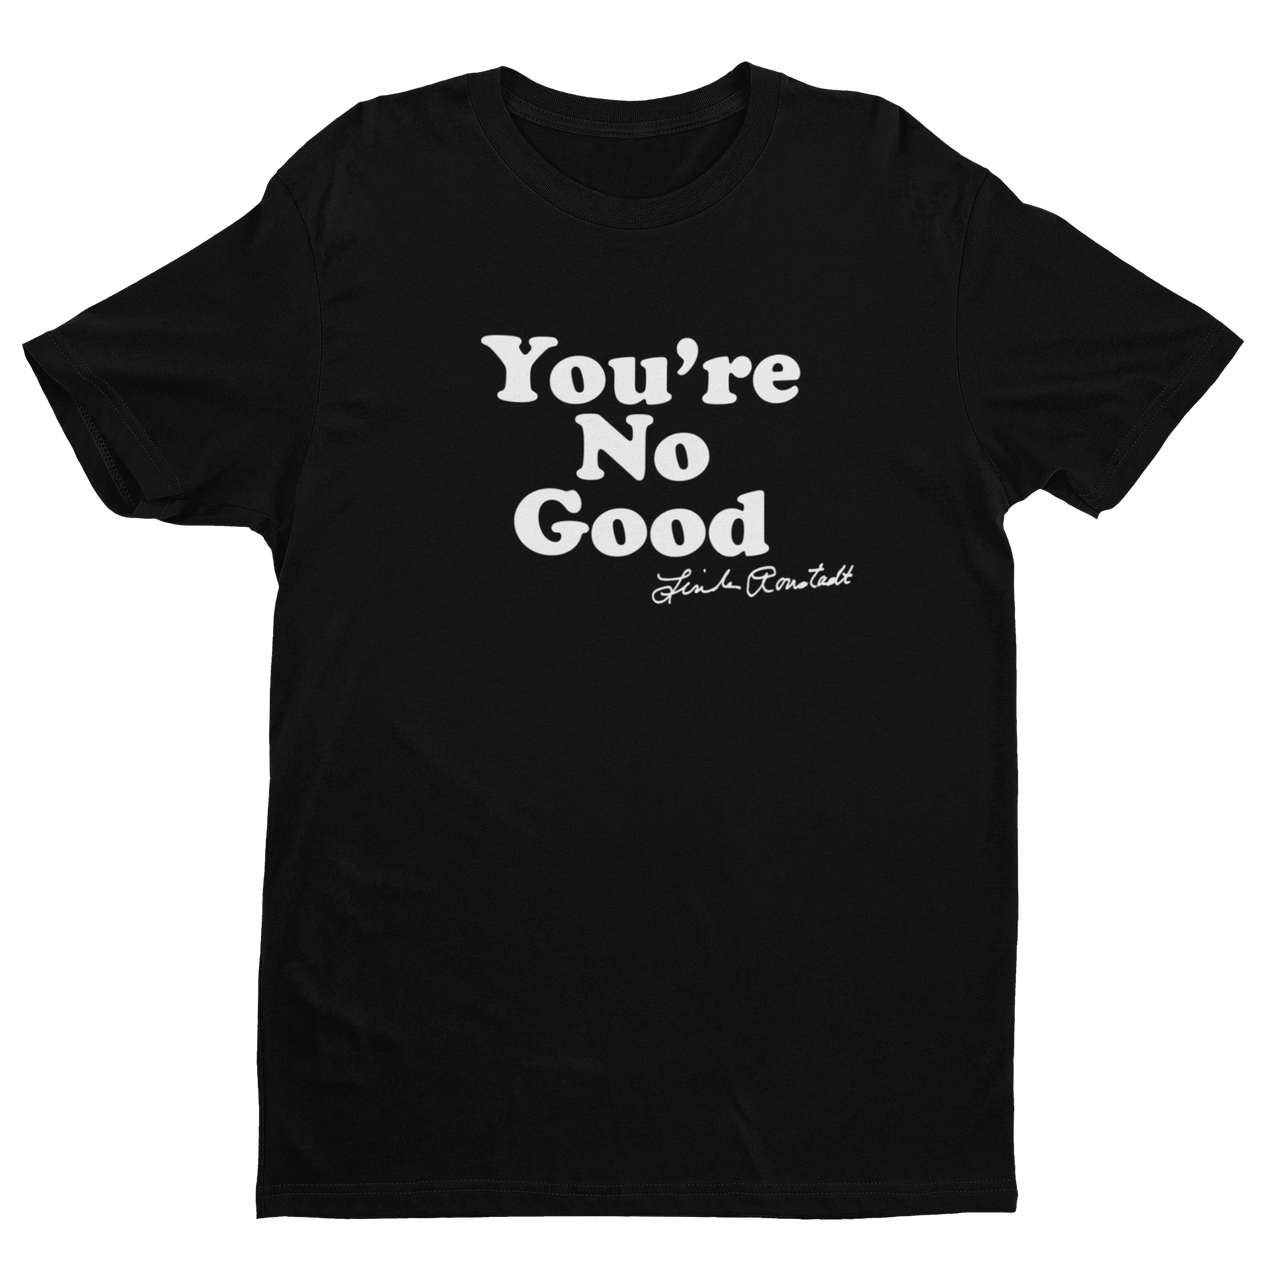 "You're No Good" Tee - Black/White